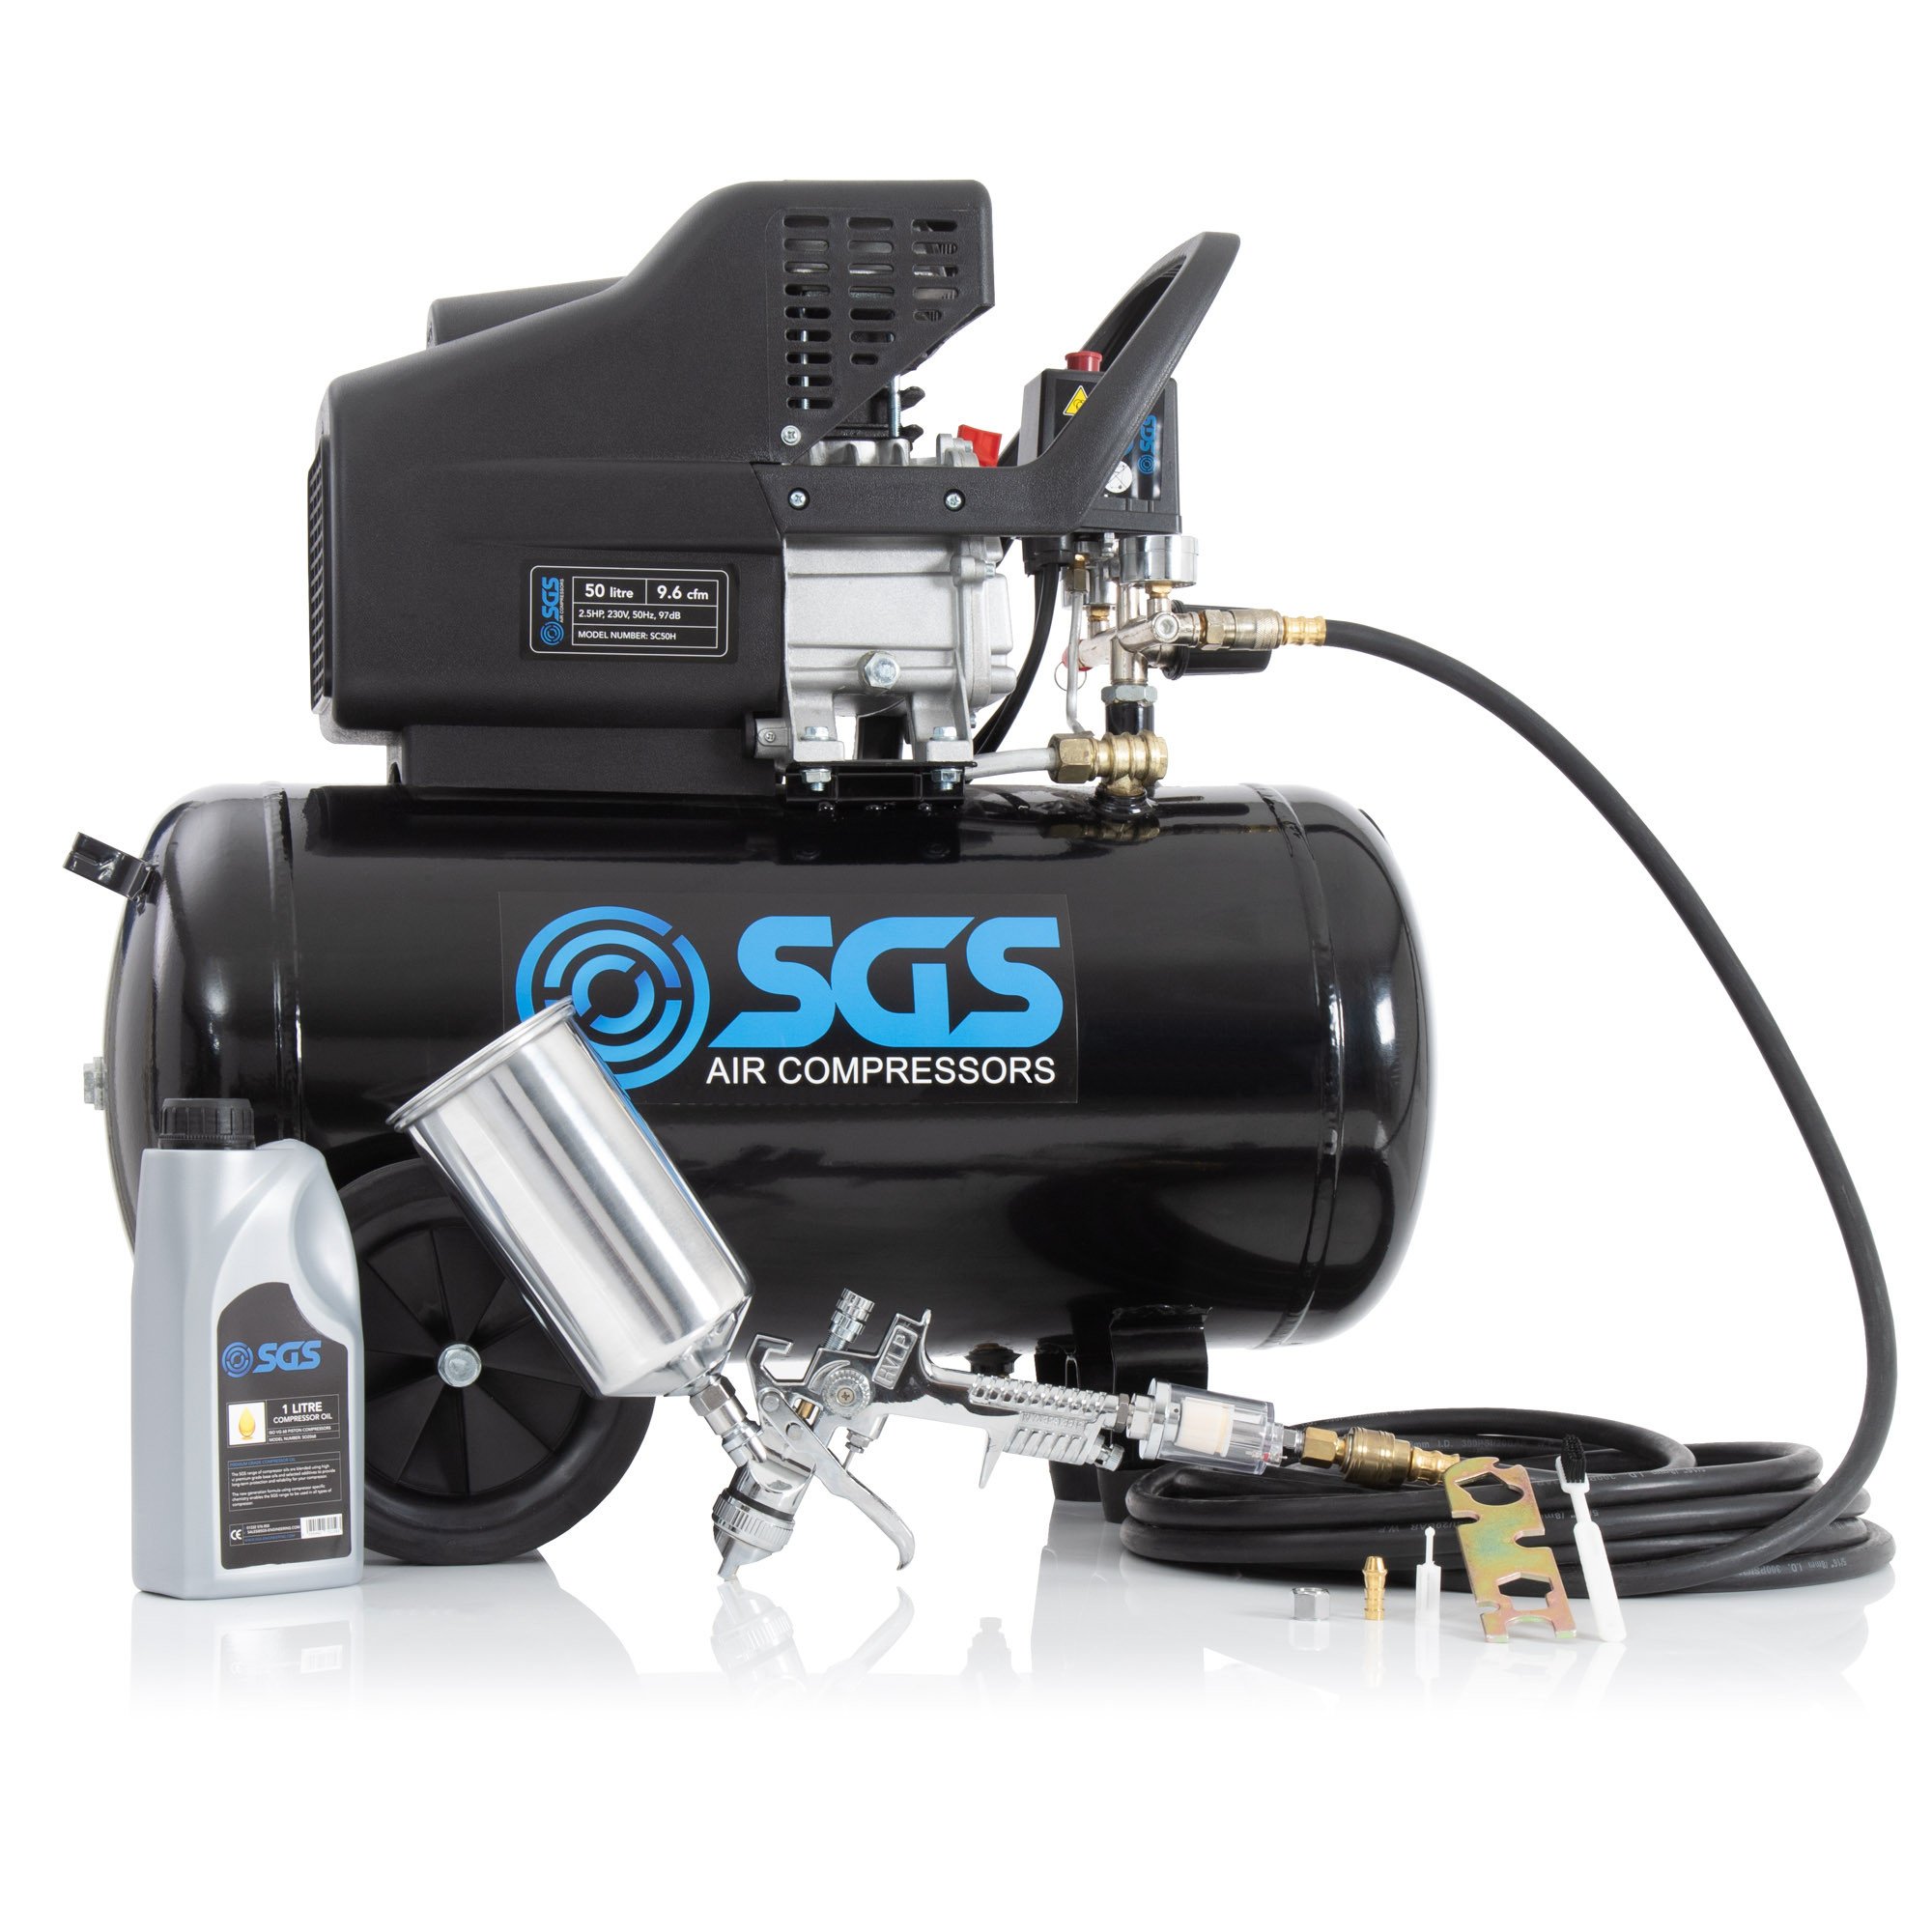 SGS 50升直接驱动空气压缩机和喷枪工具2.5 - 9.6 cfm惠普50 l